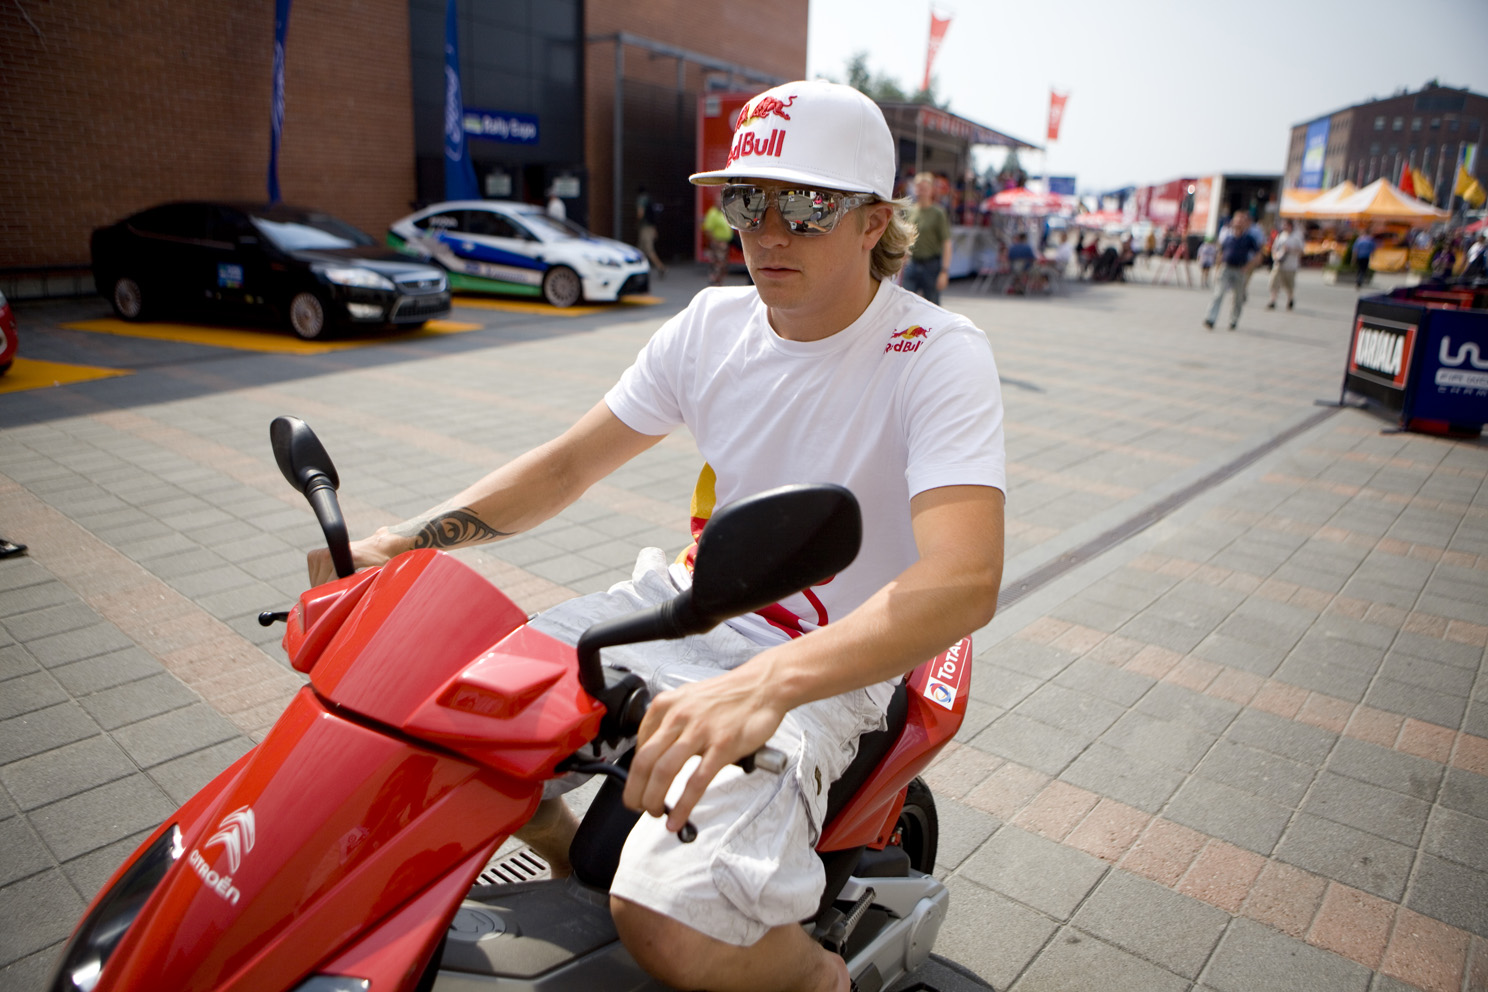 Kimi Raikkonen, on a bike (red)